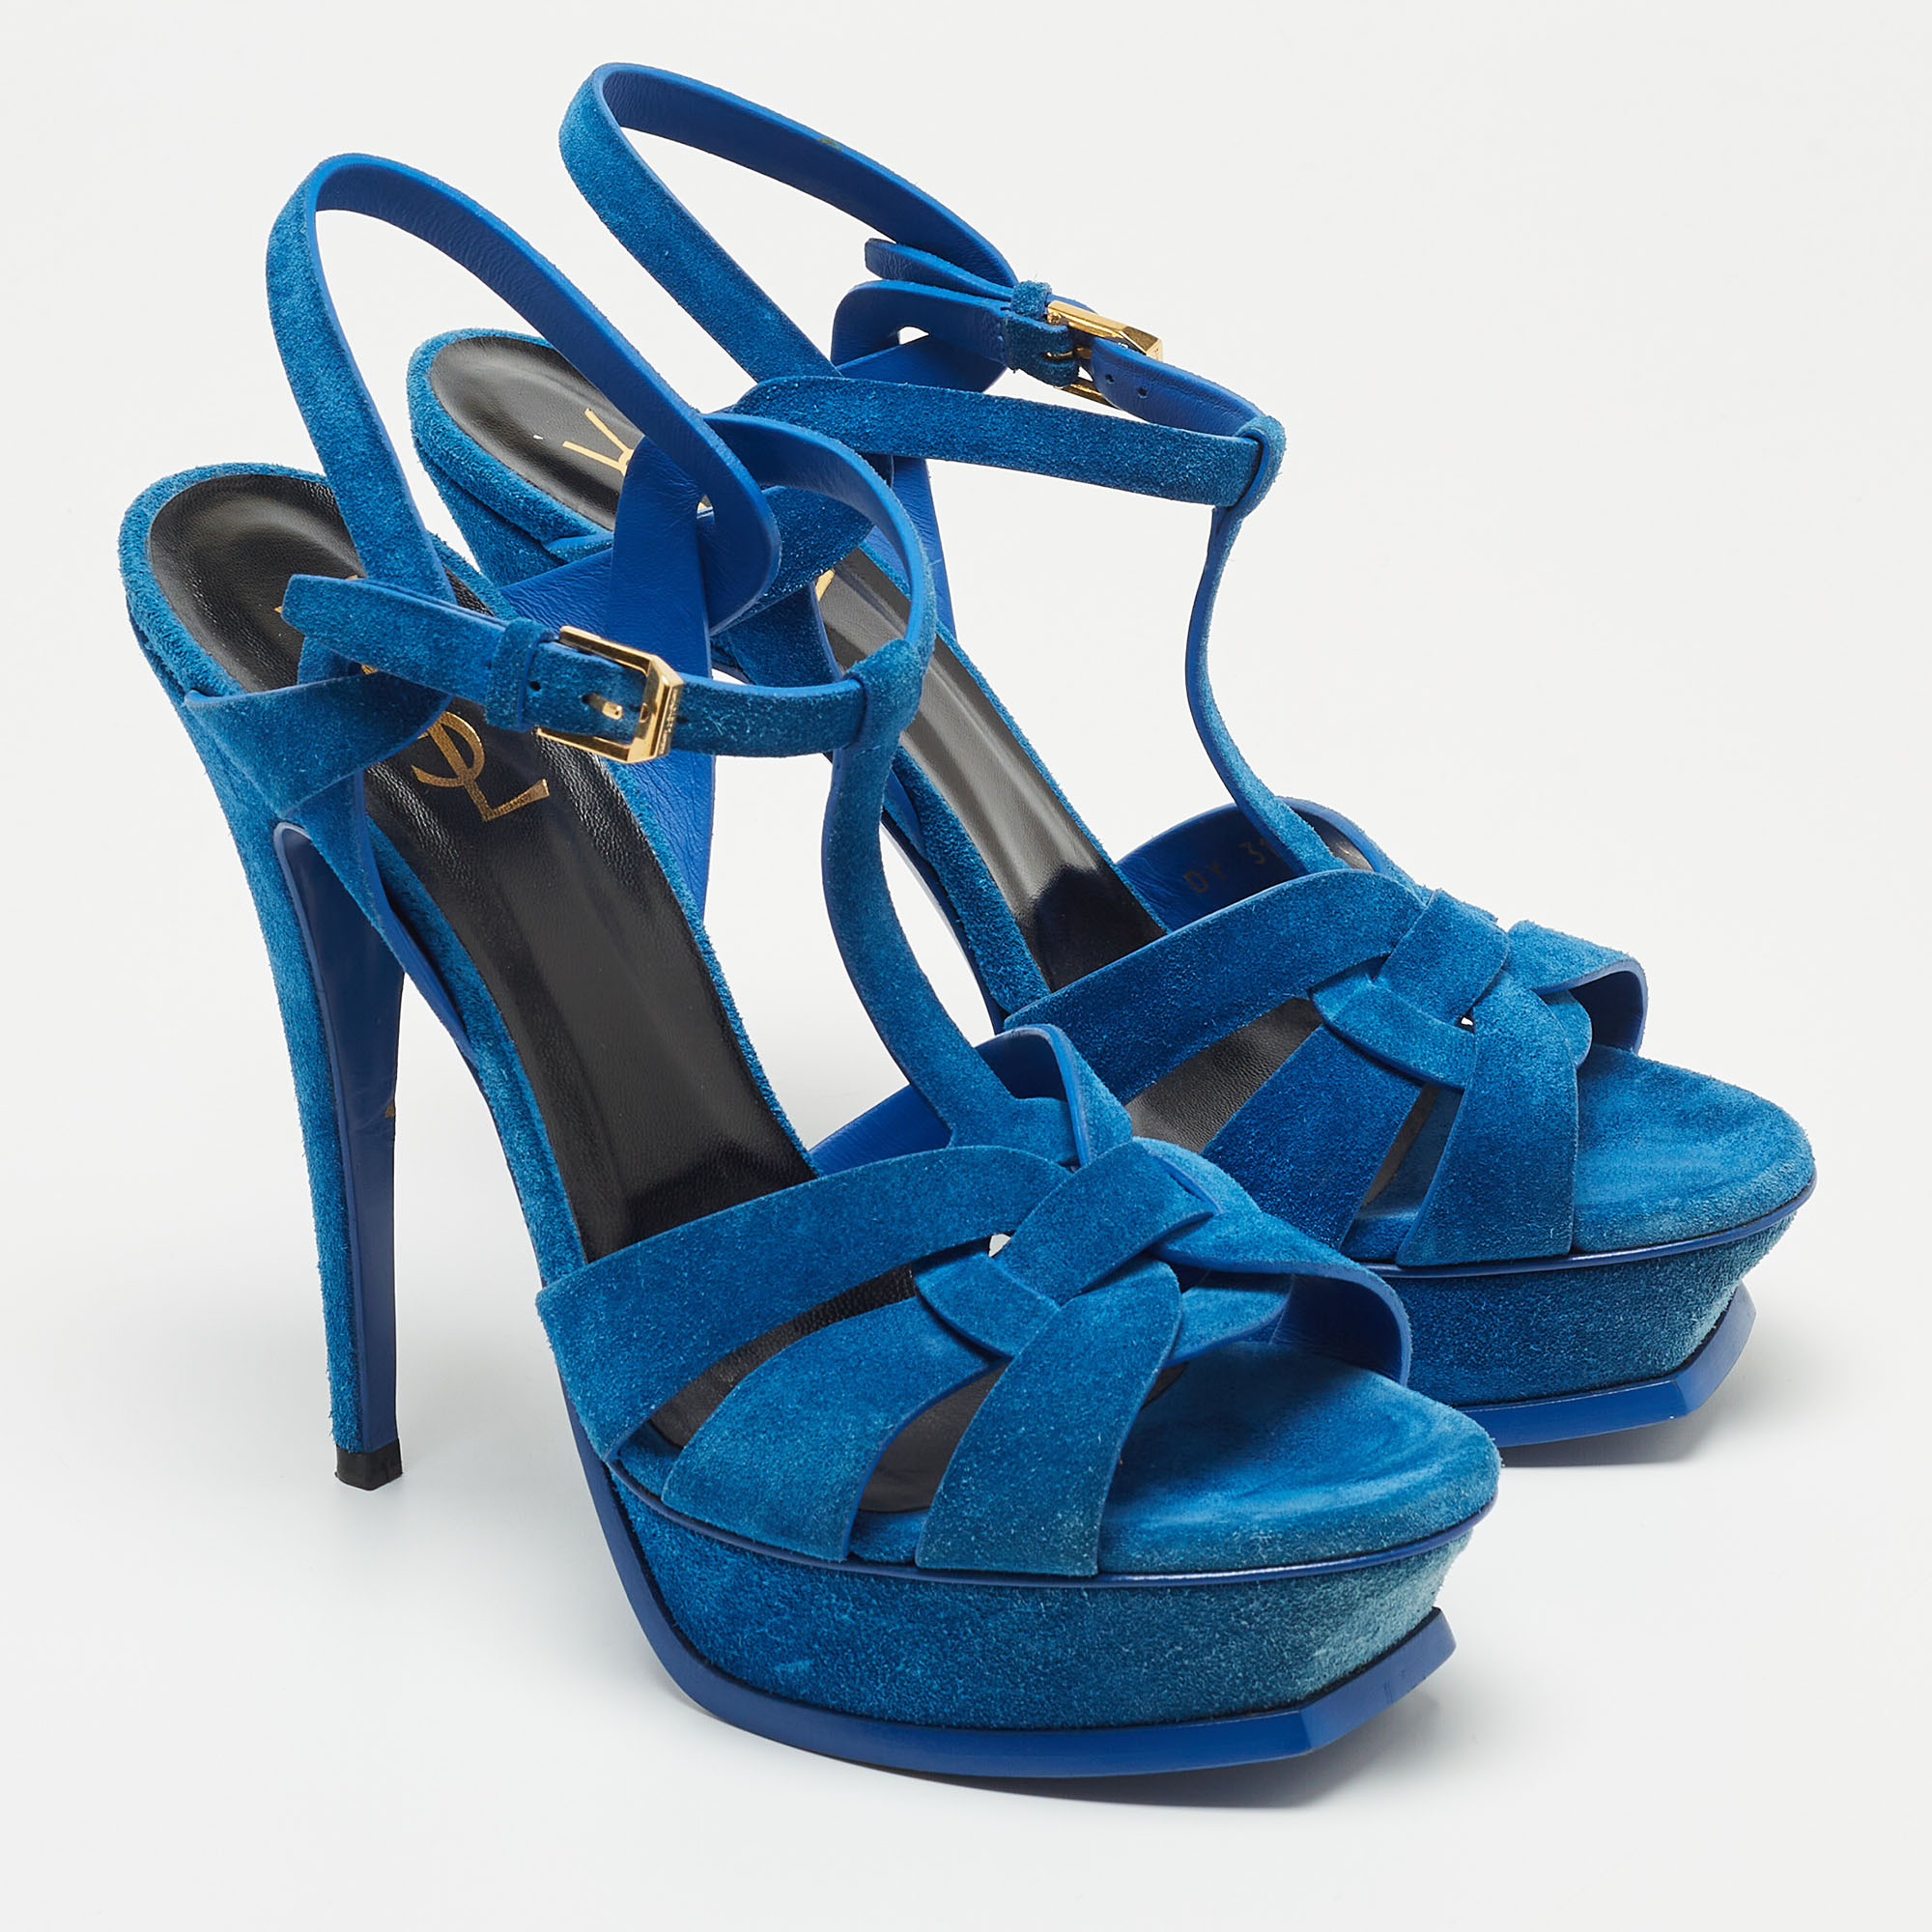 Yves Saint Laurent Blue Suede Tribute Ankle Strap Sandals Size 40.5